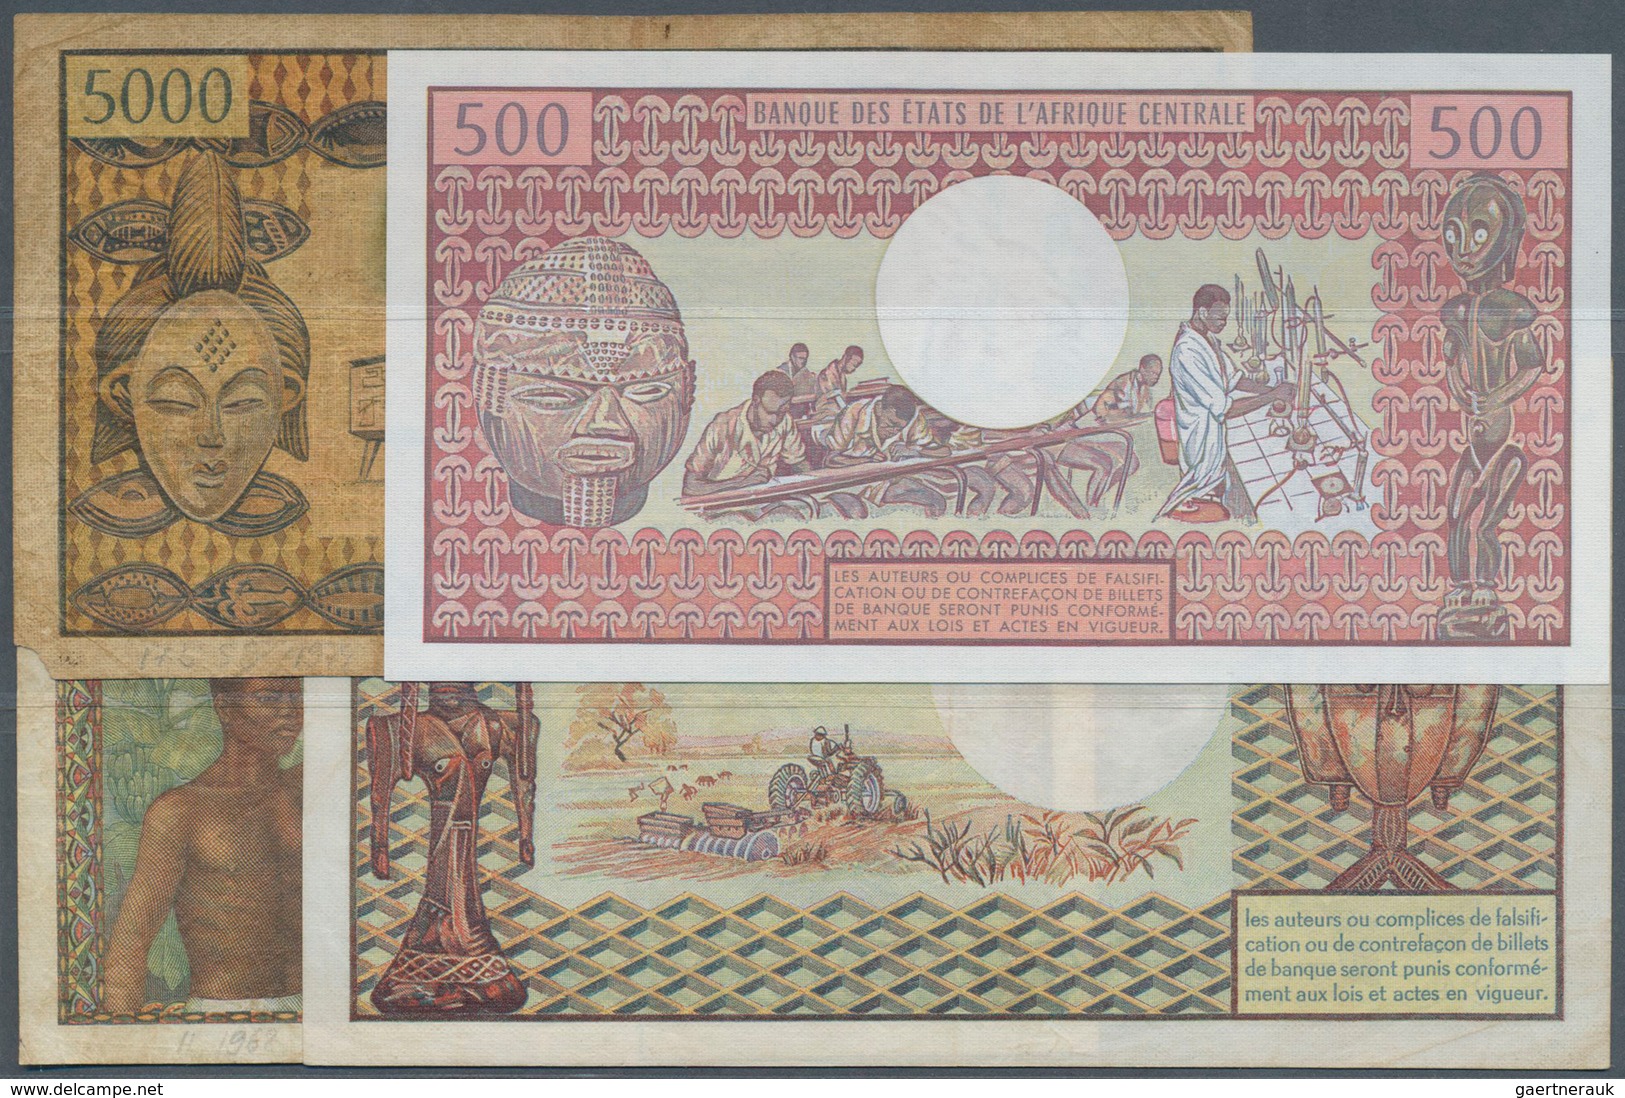 01245 Cameroon / Kamerun: Republique Federale Du Cameroun 500 Francs ND(1962) P.11 In F- And Republique Un - Kameroen